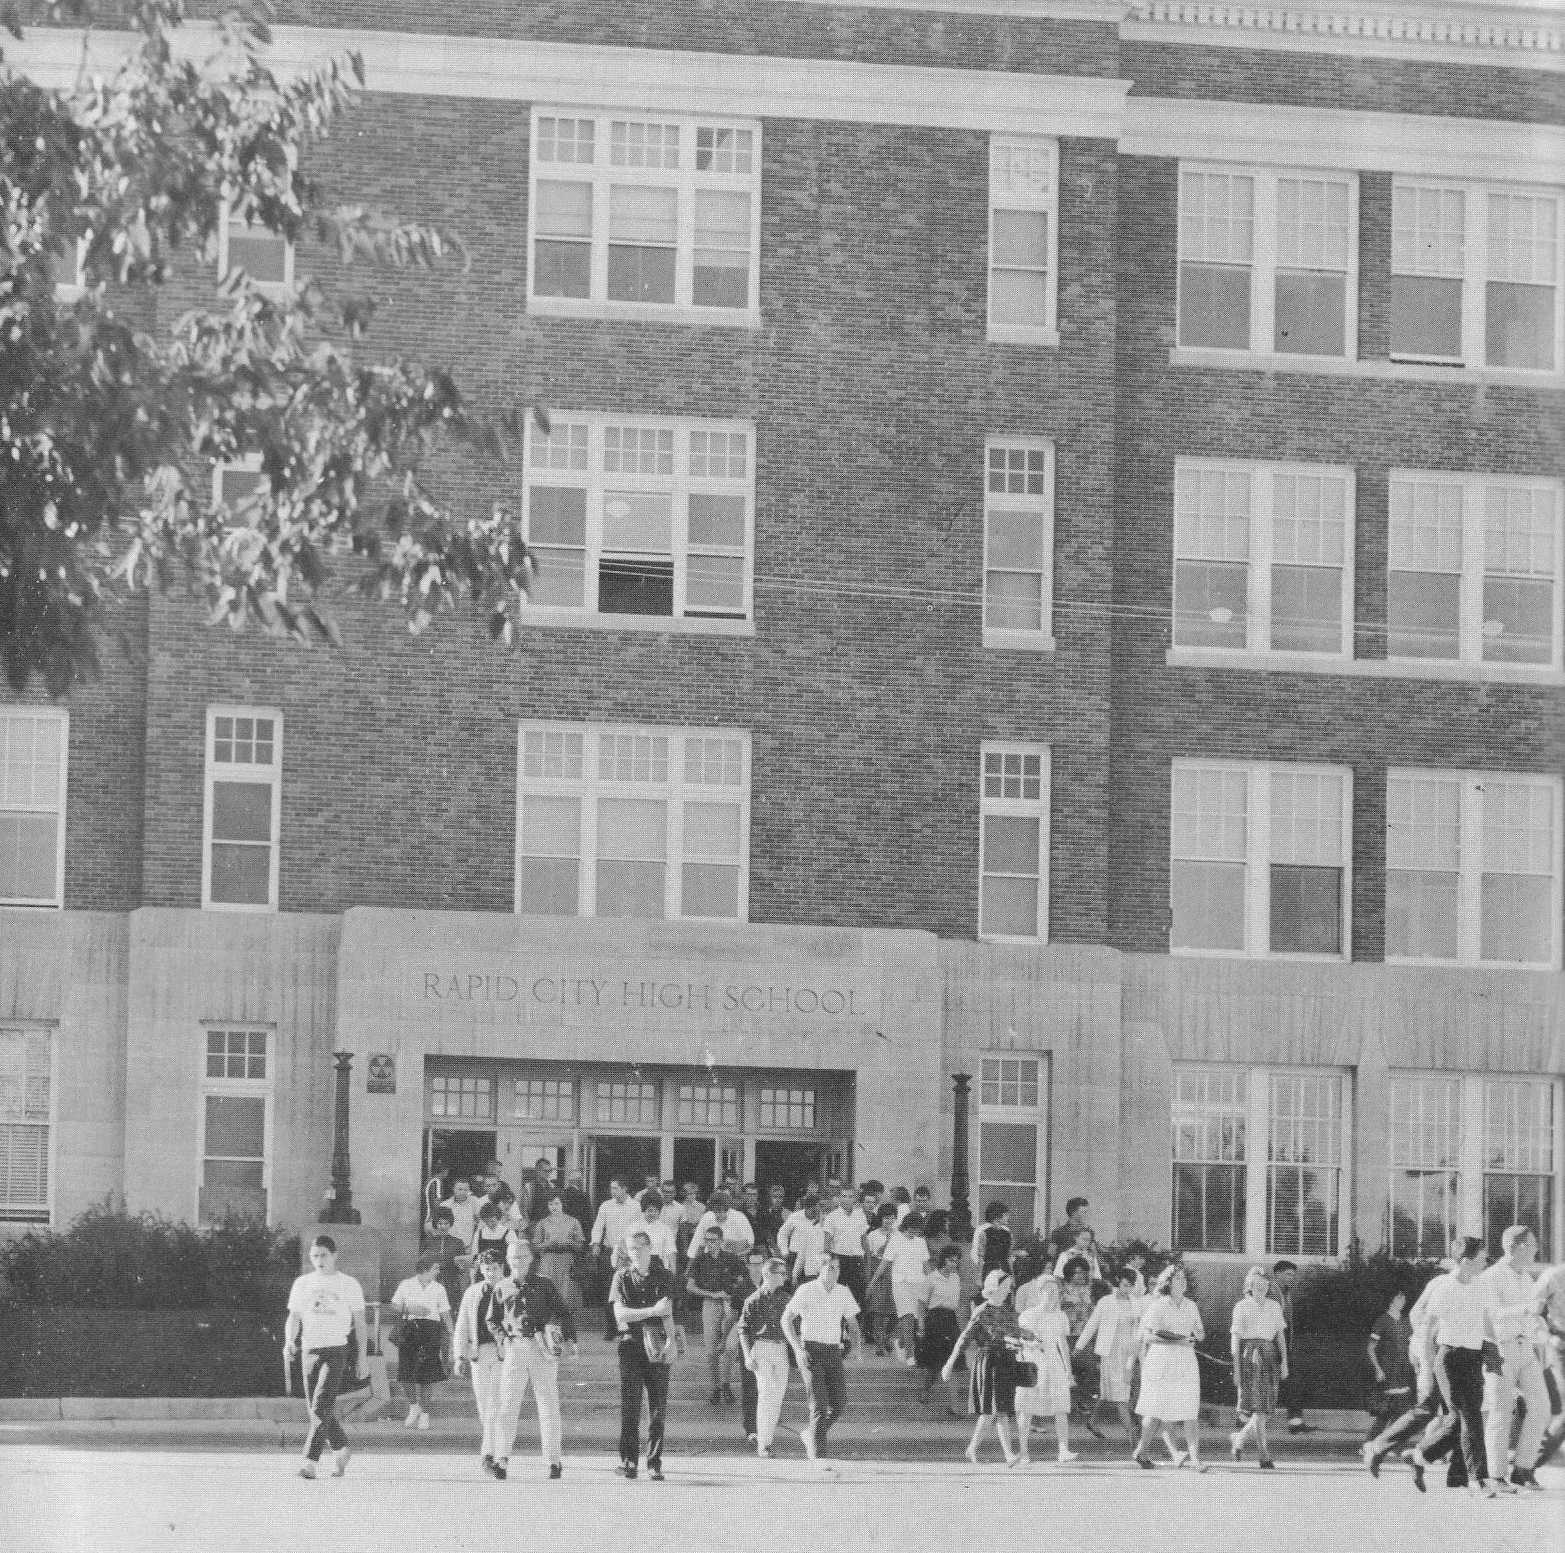 Rapid City High School 1963-64